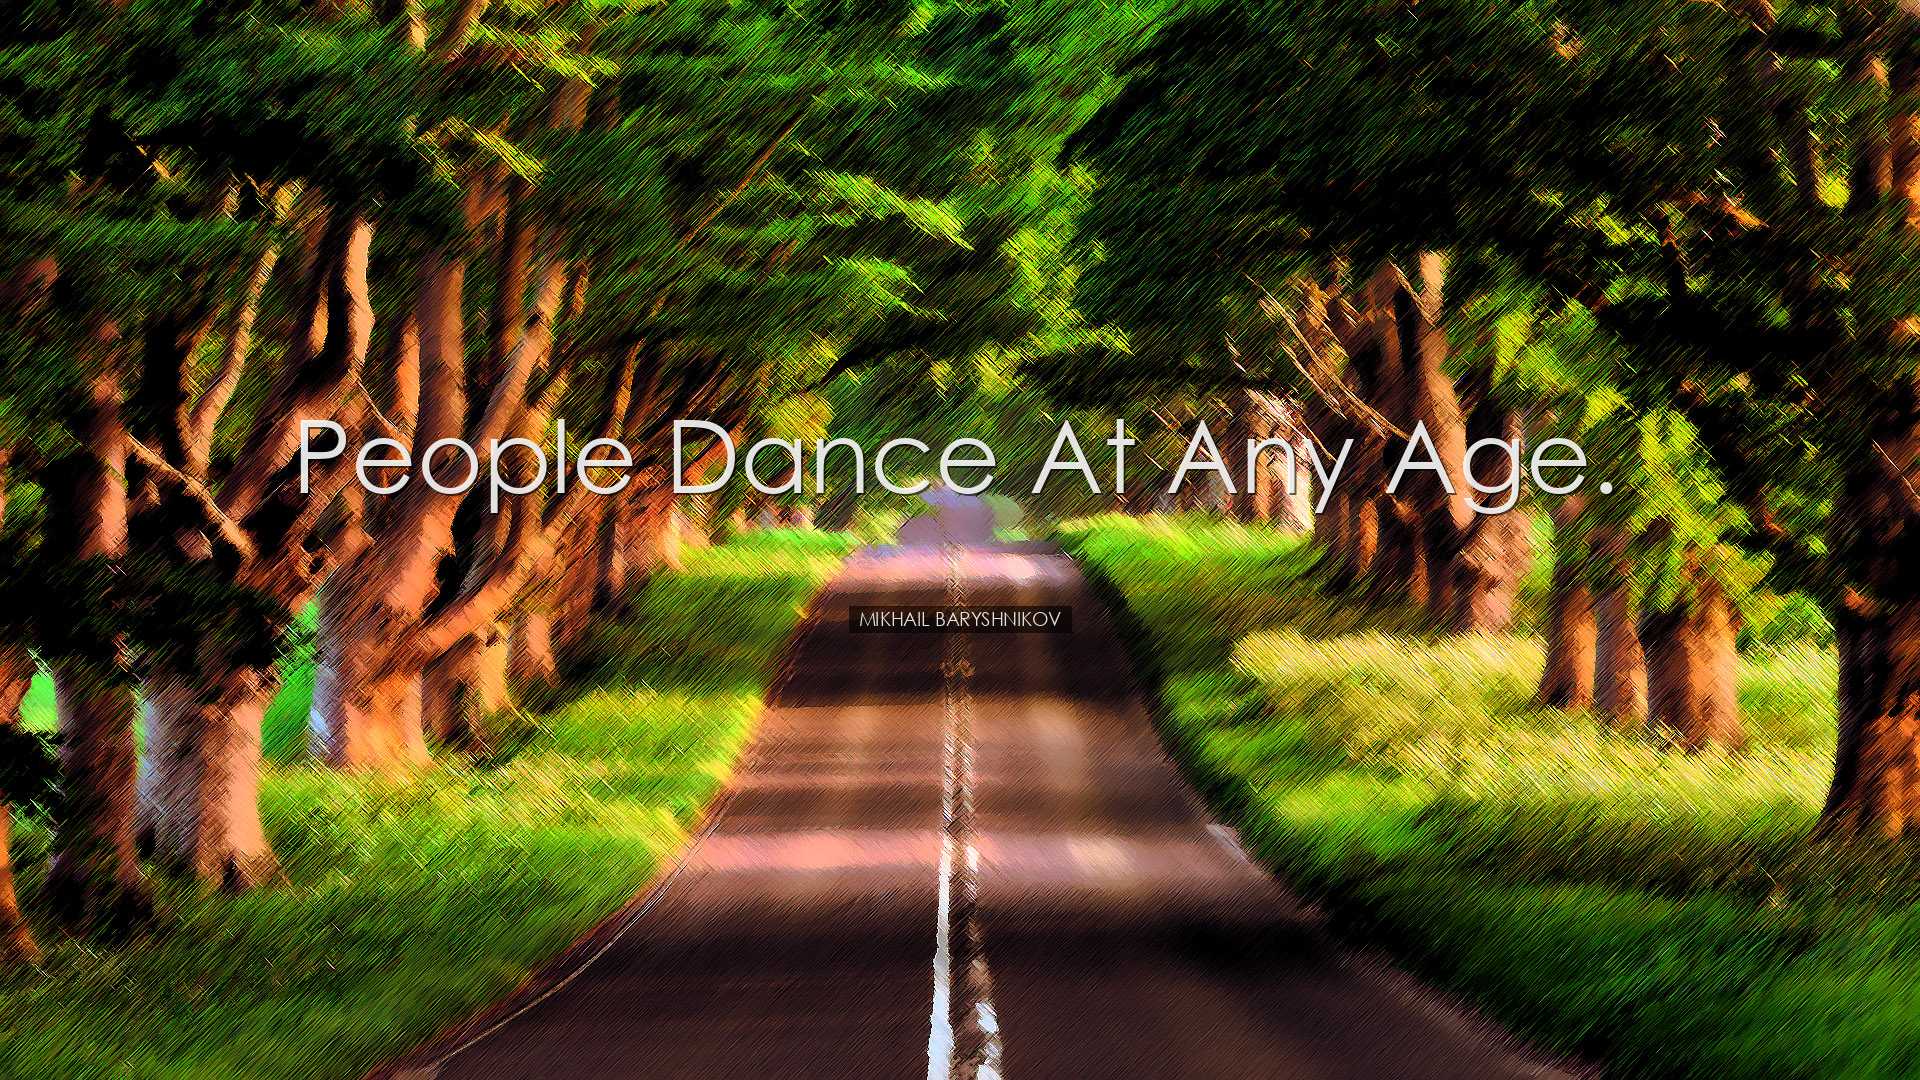 People dance at any age. - Mikhail Baryshnikov